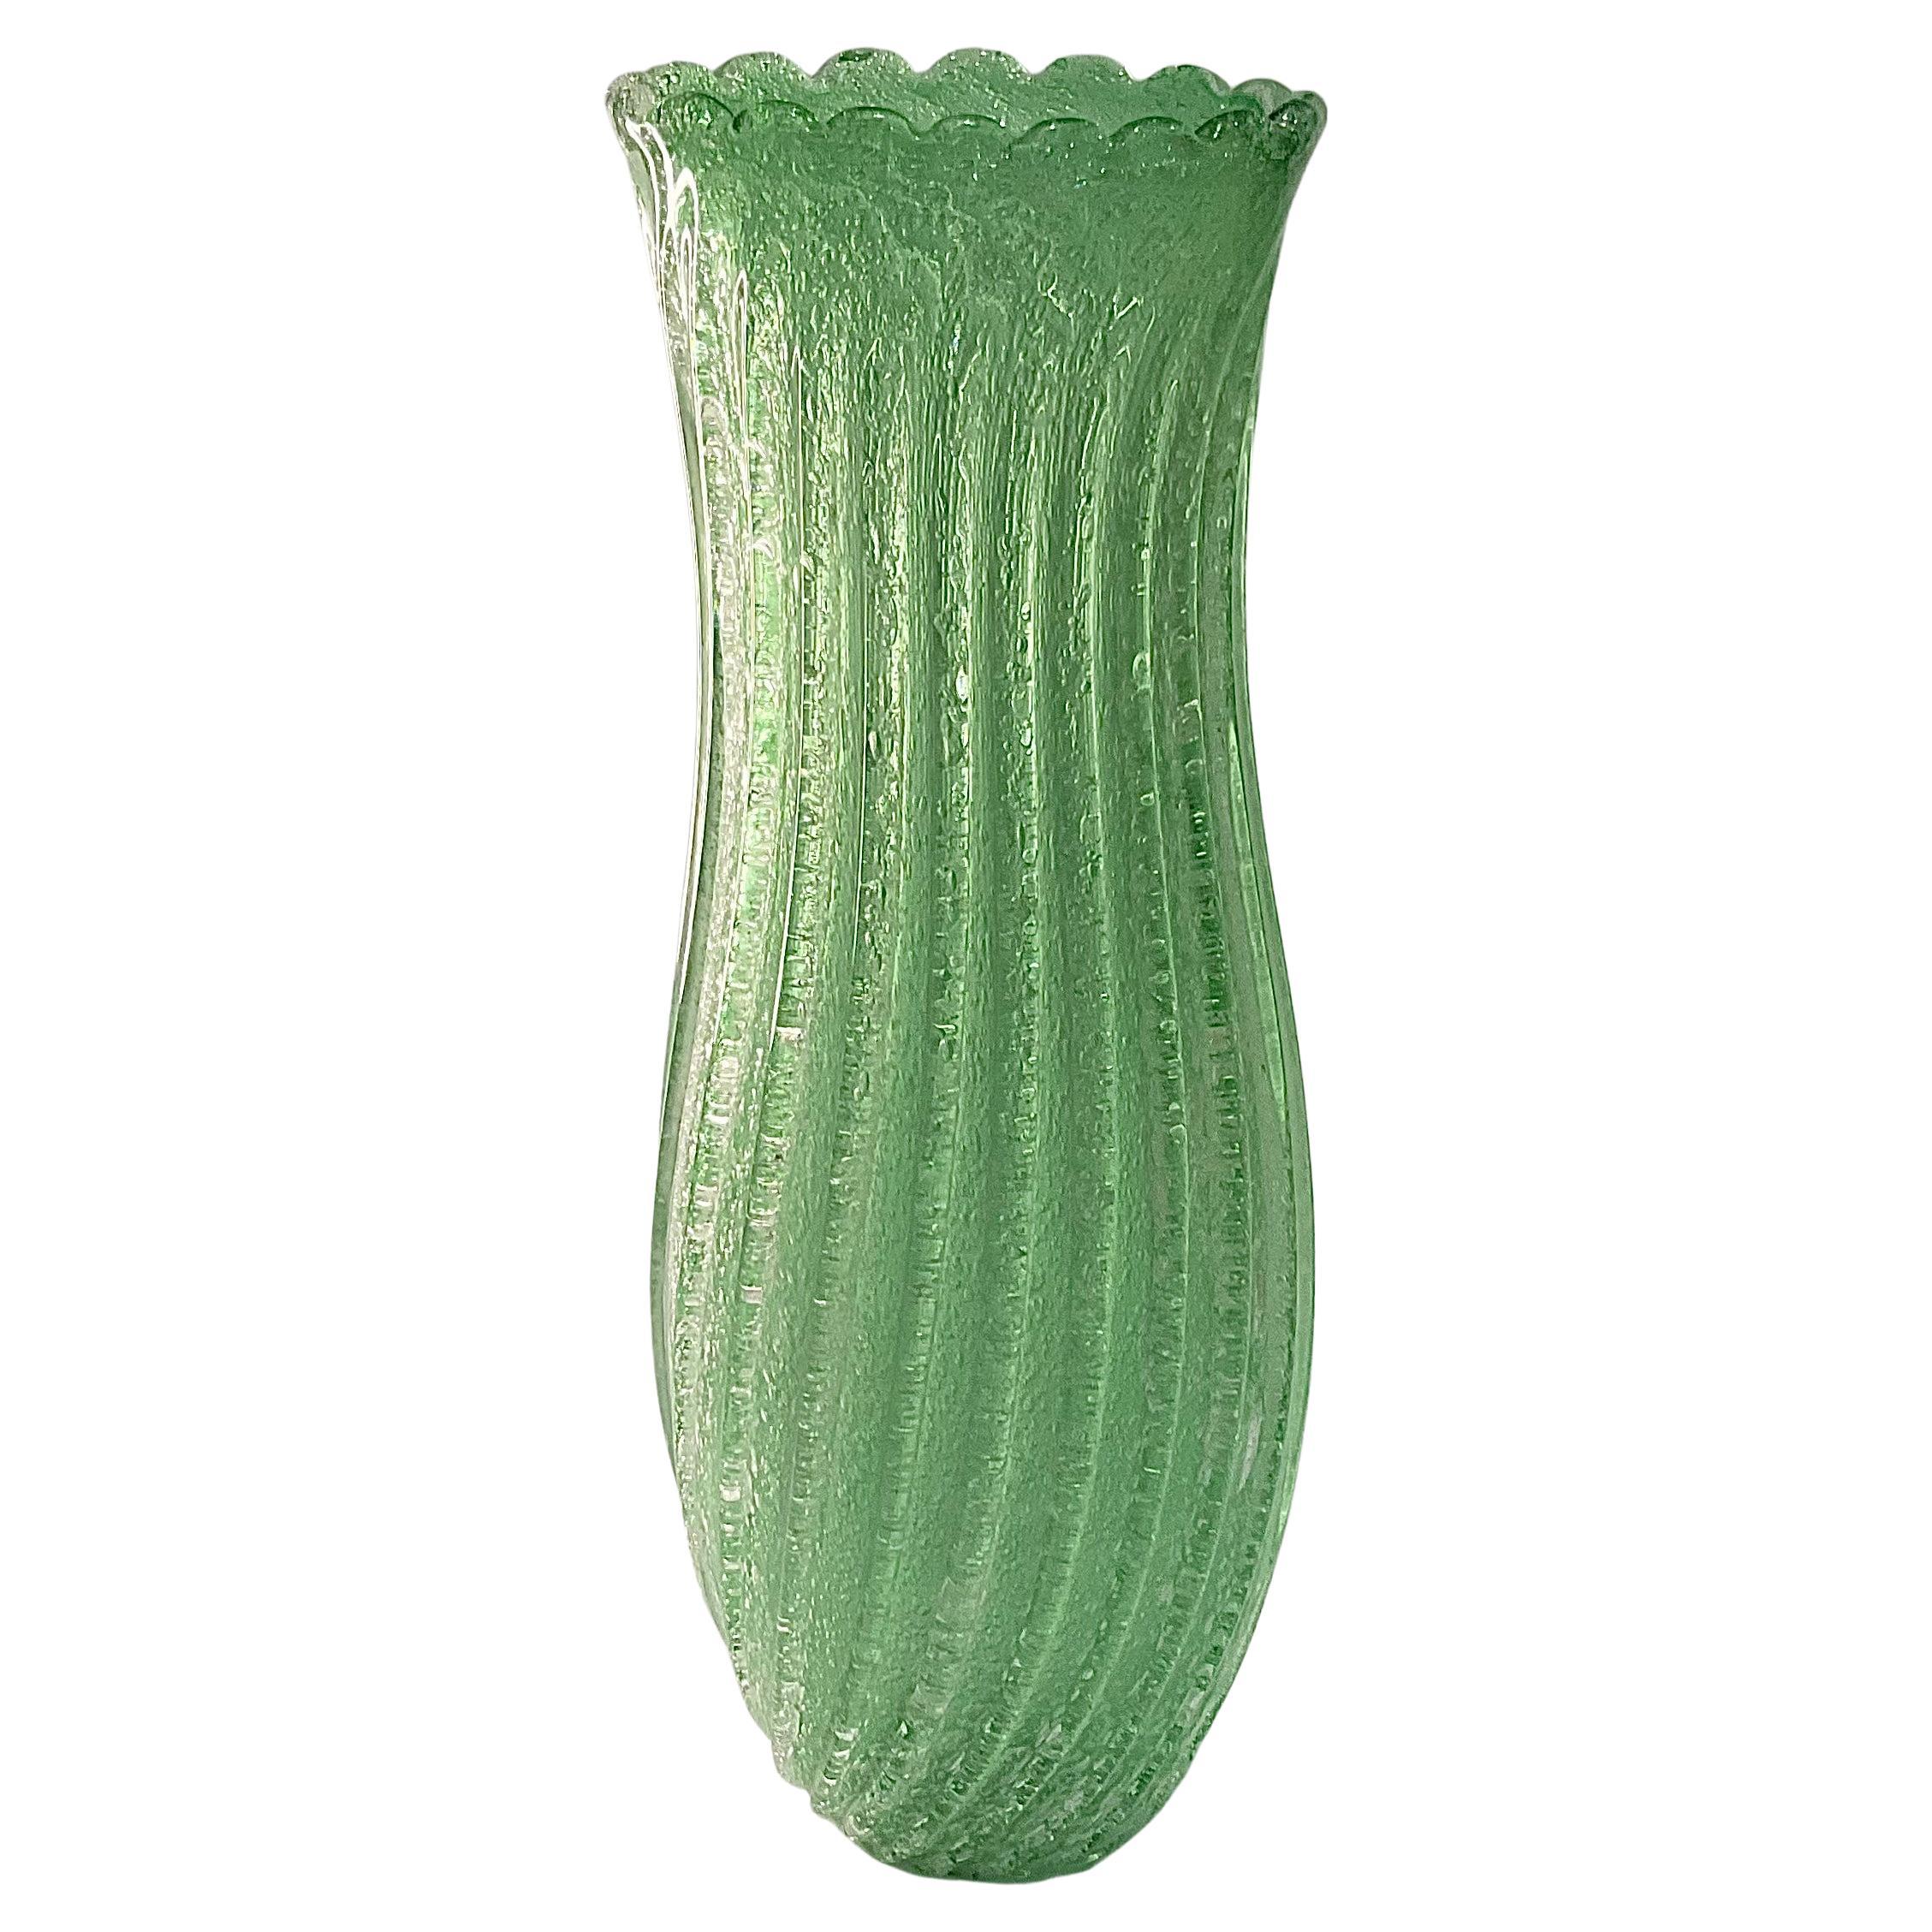 Grand vase en verre d'art de Murano en verre Pulegoso vert avec motif nervuré festonné